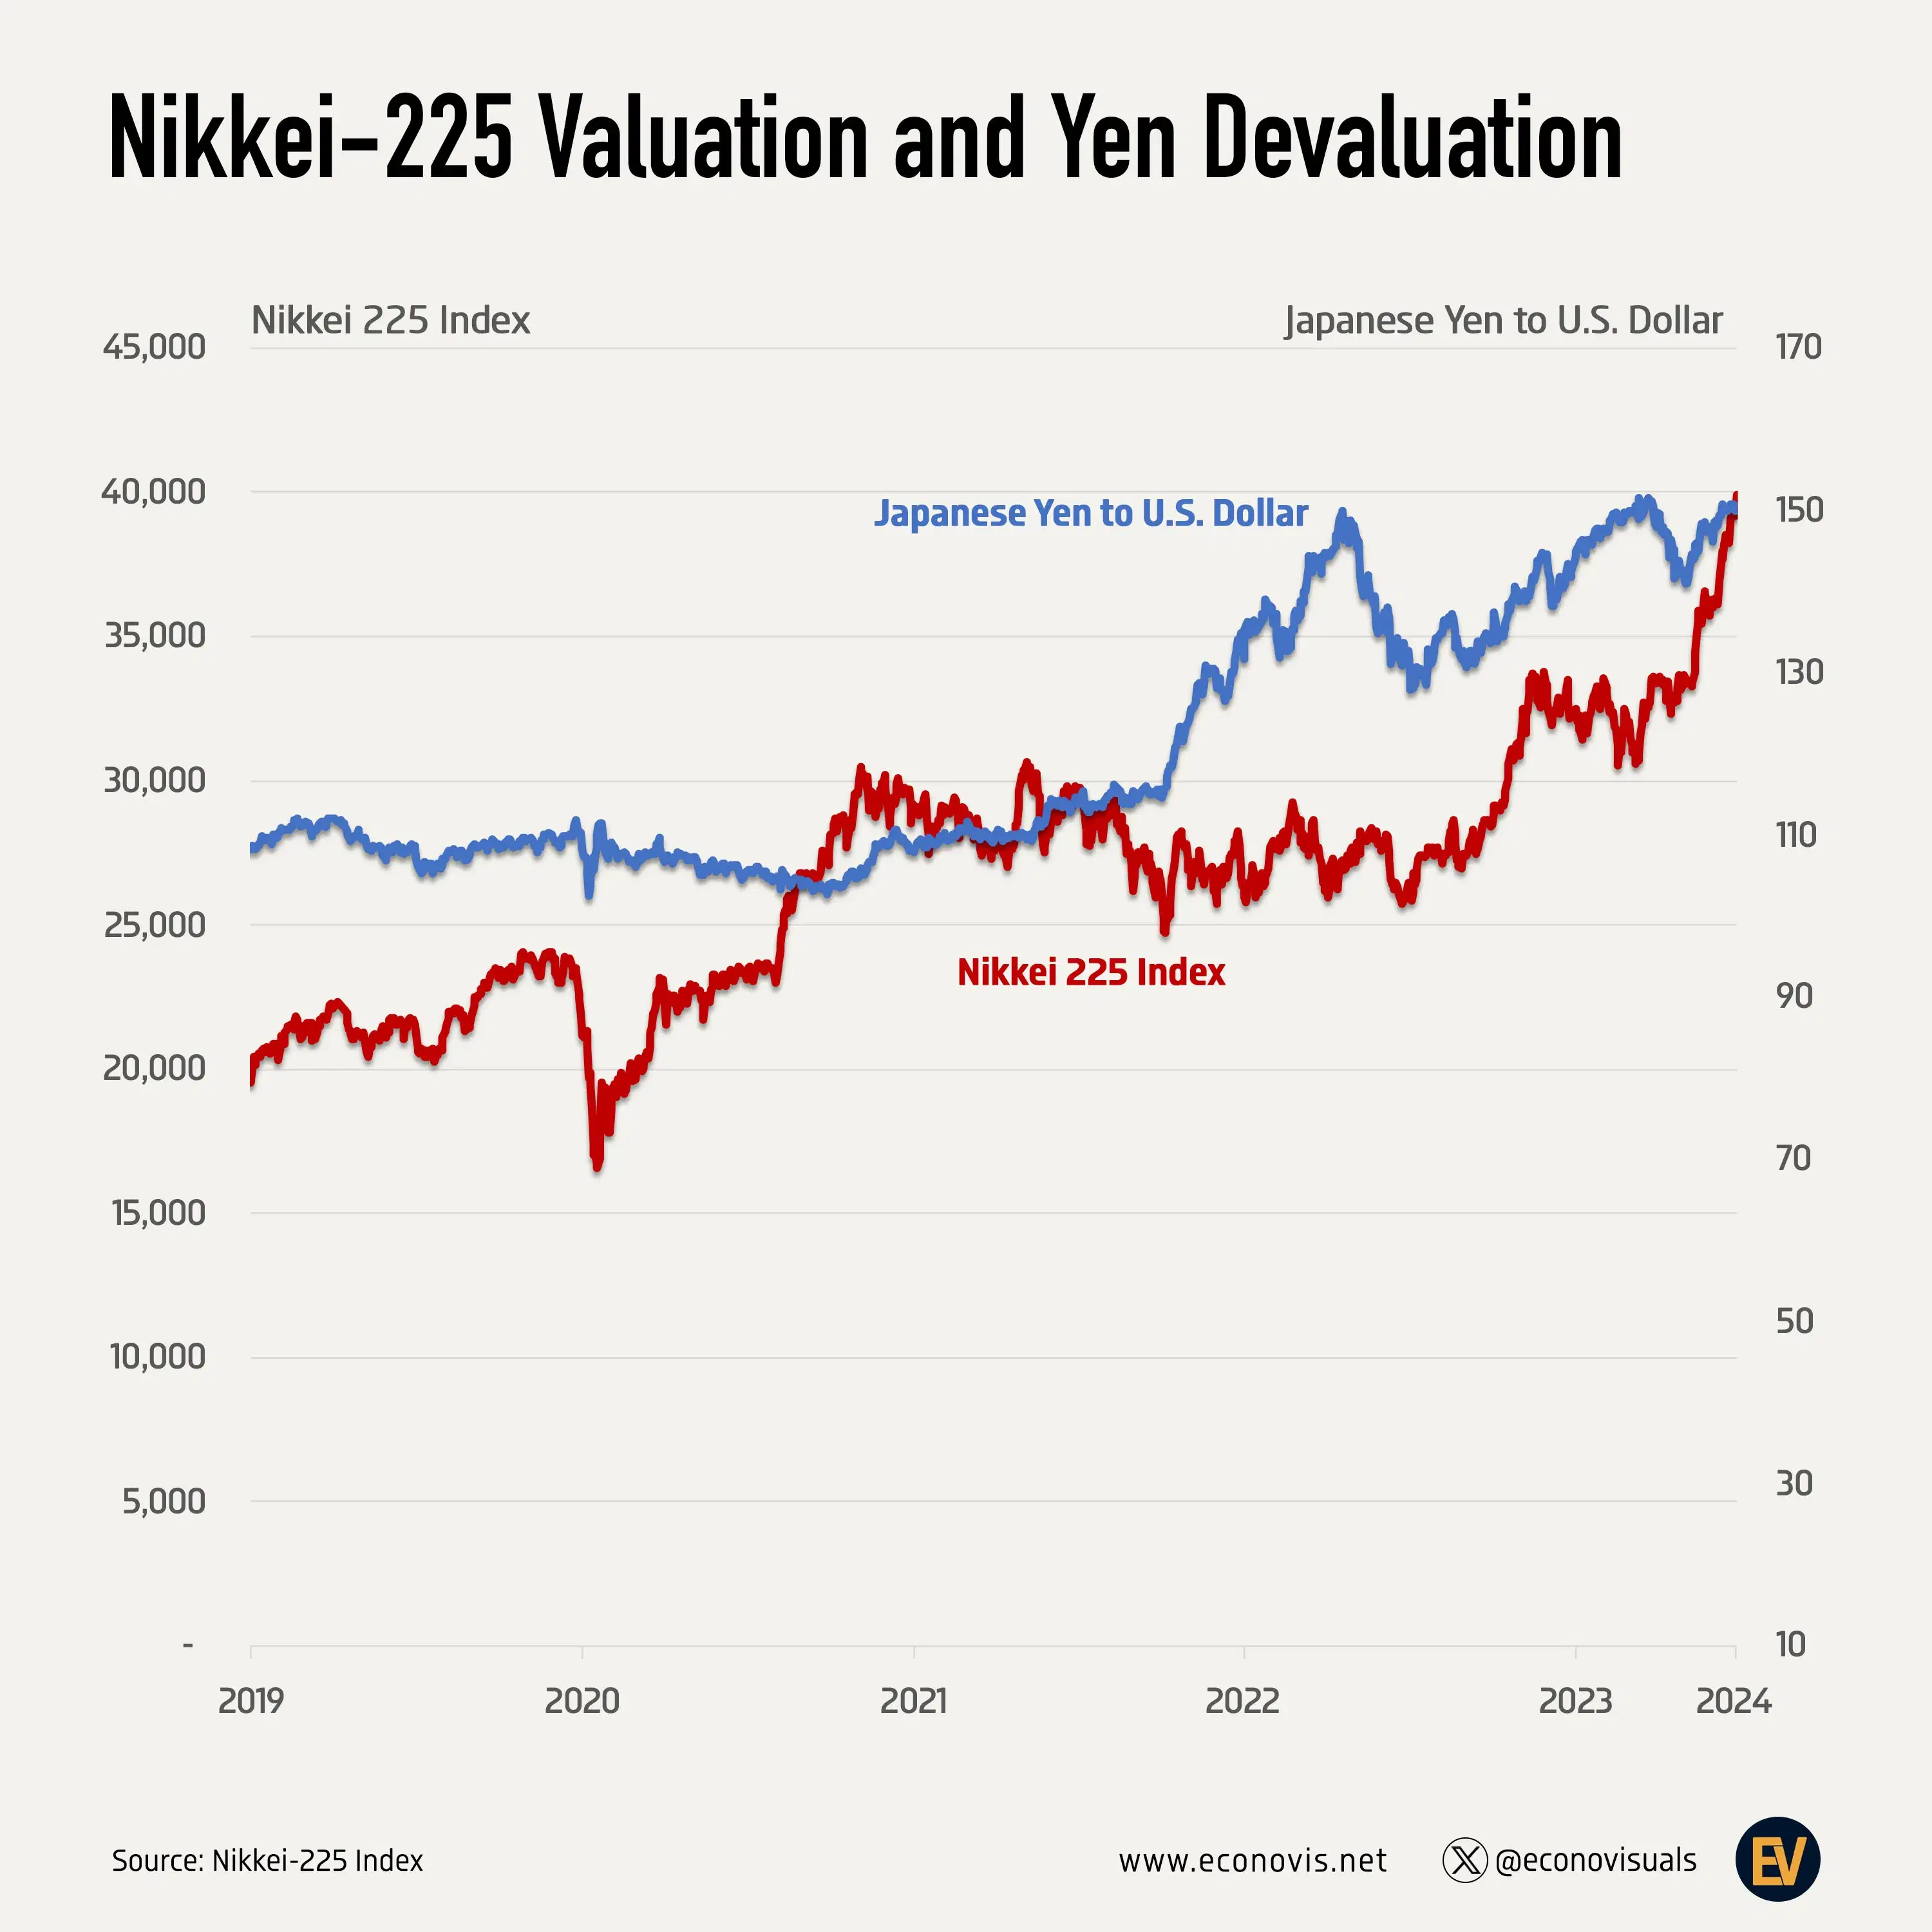 Nikkei-225 Valuation and Yen Devaluation